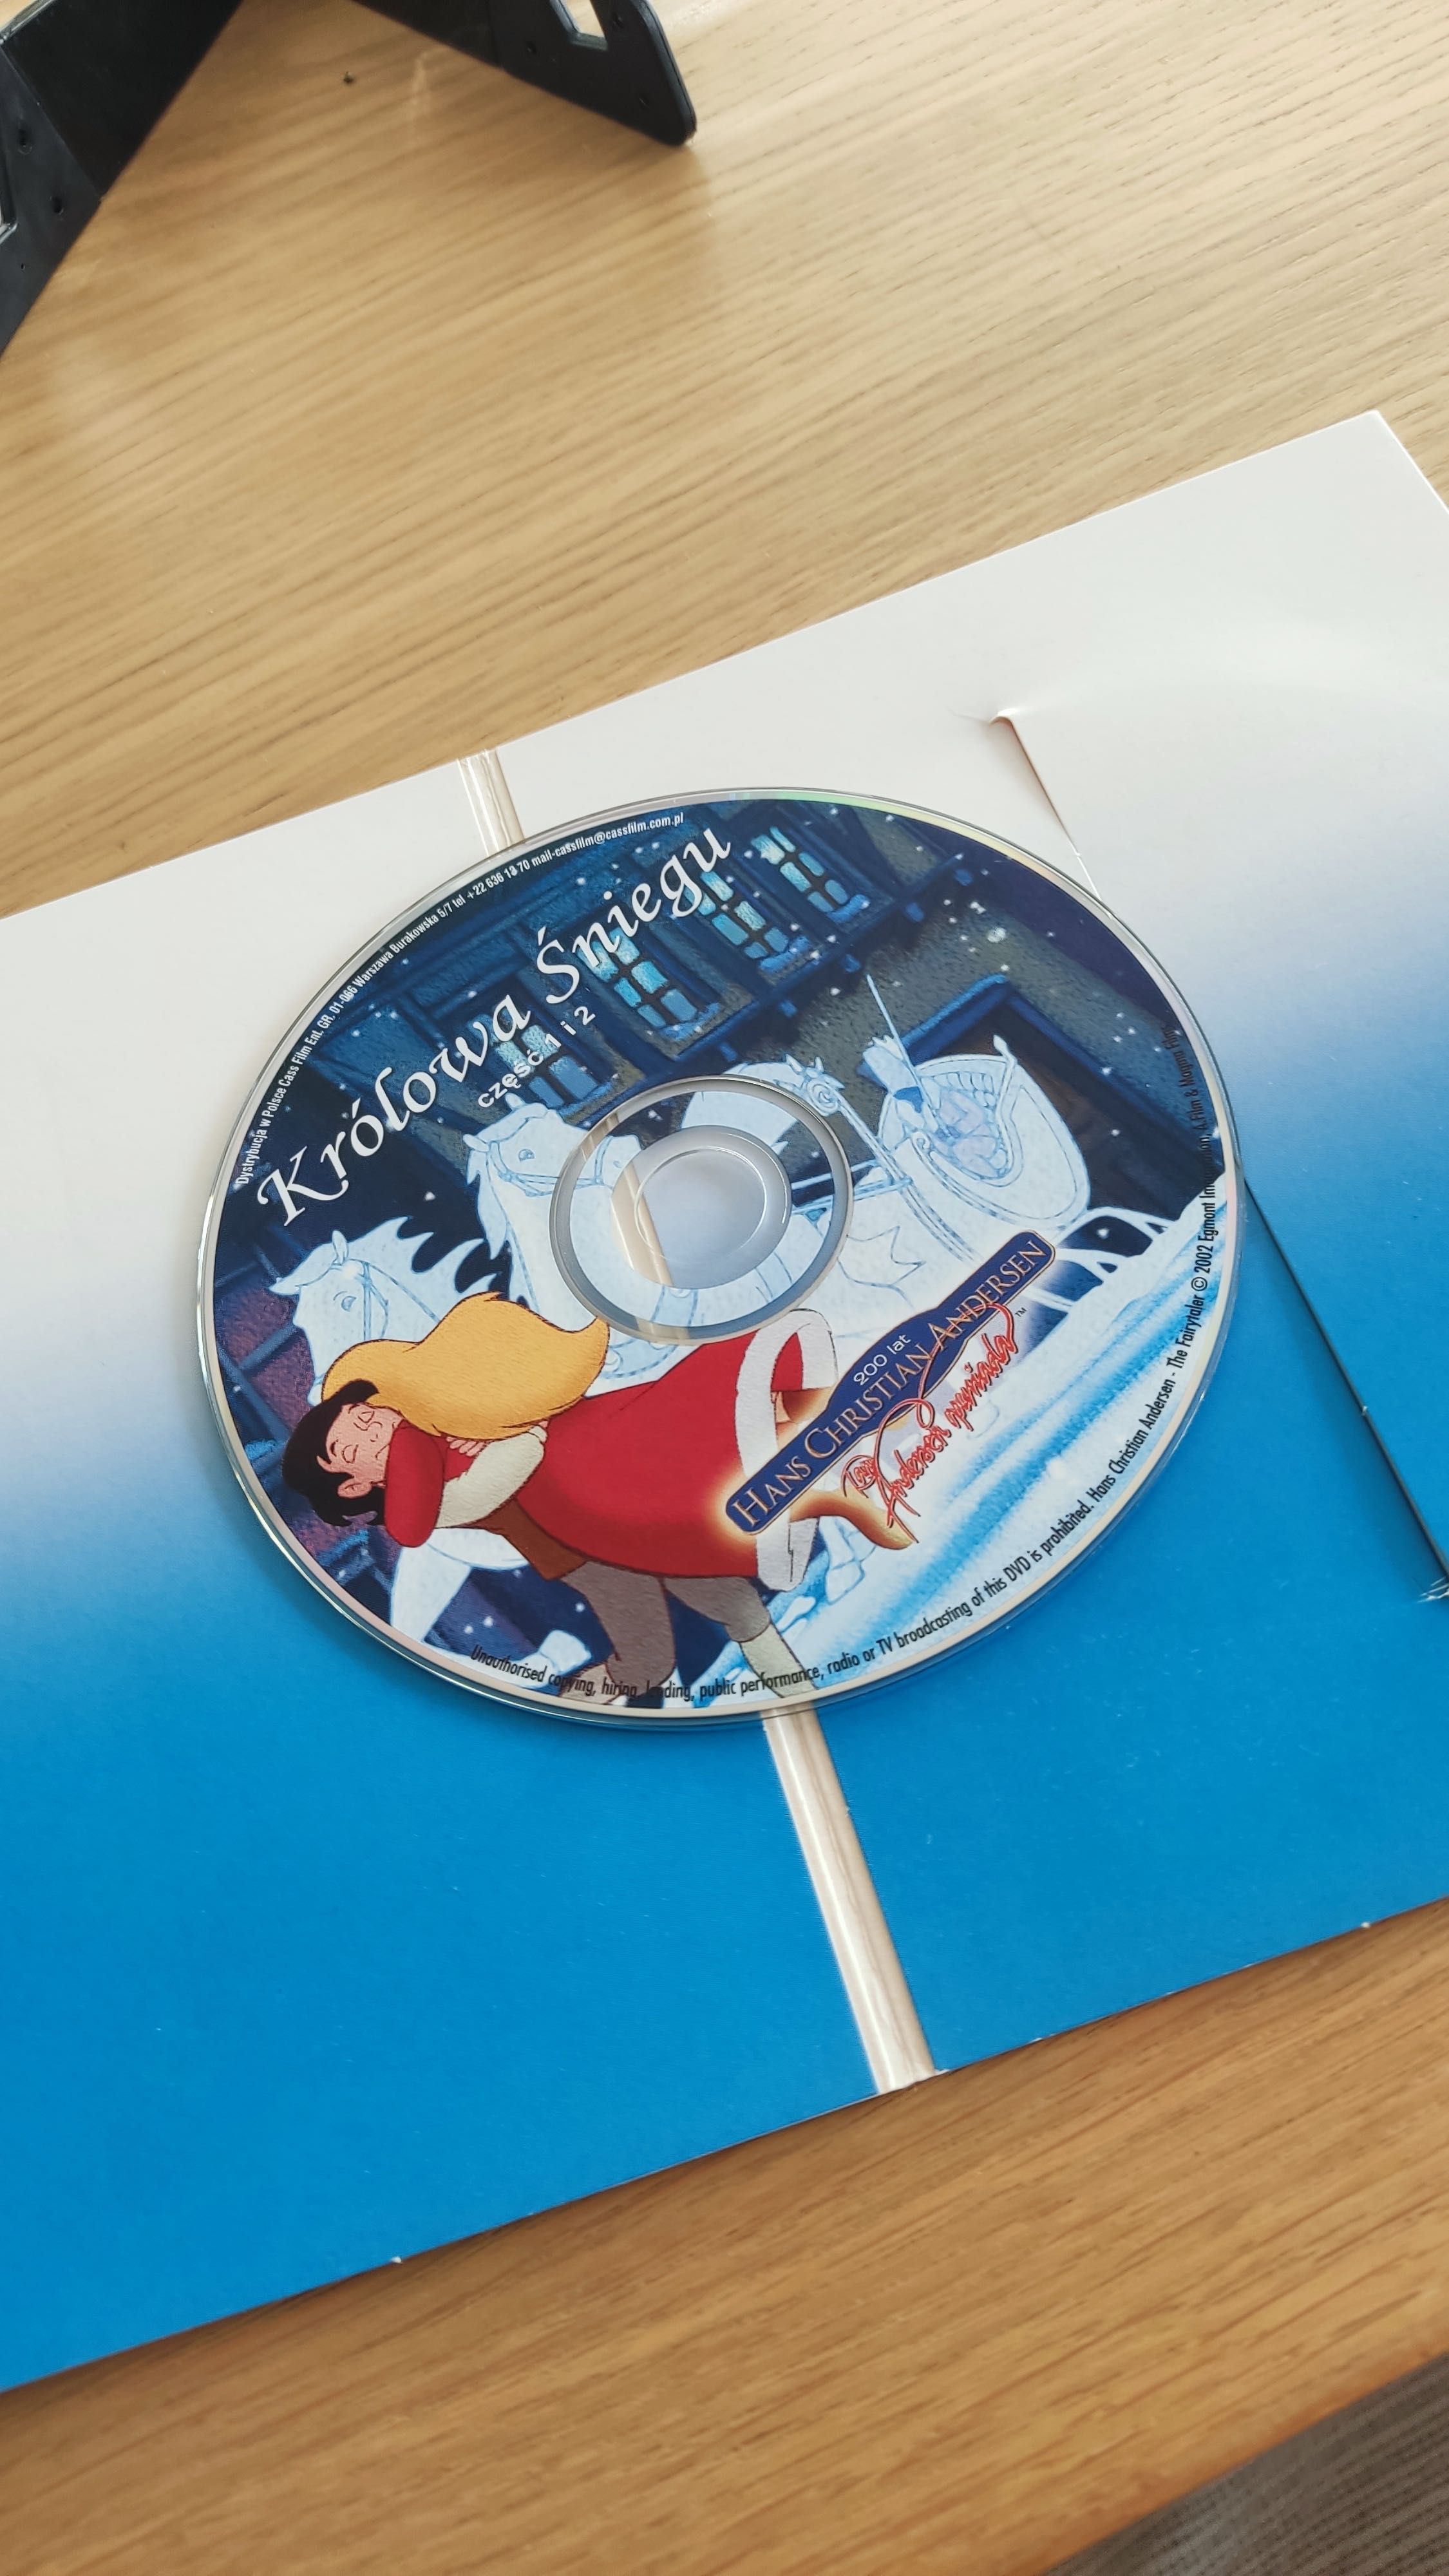 Bajka DVD - Królowa śniegu